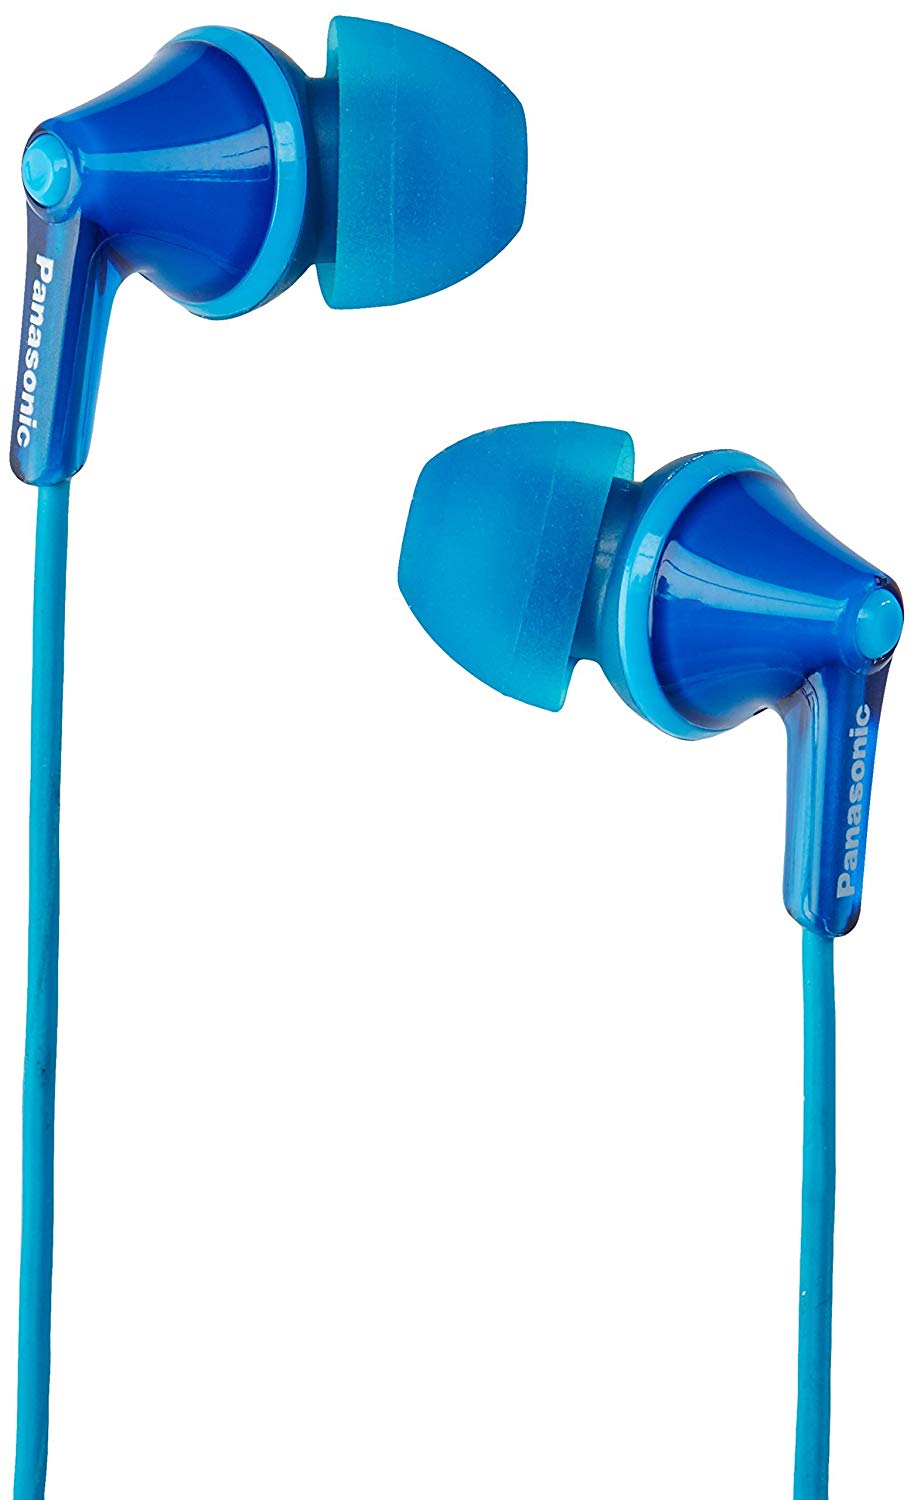 Panasonic-Ergofit-in-Ear-Earbuds